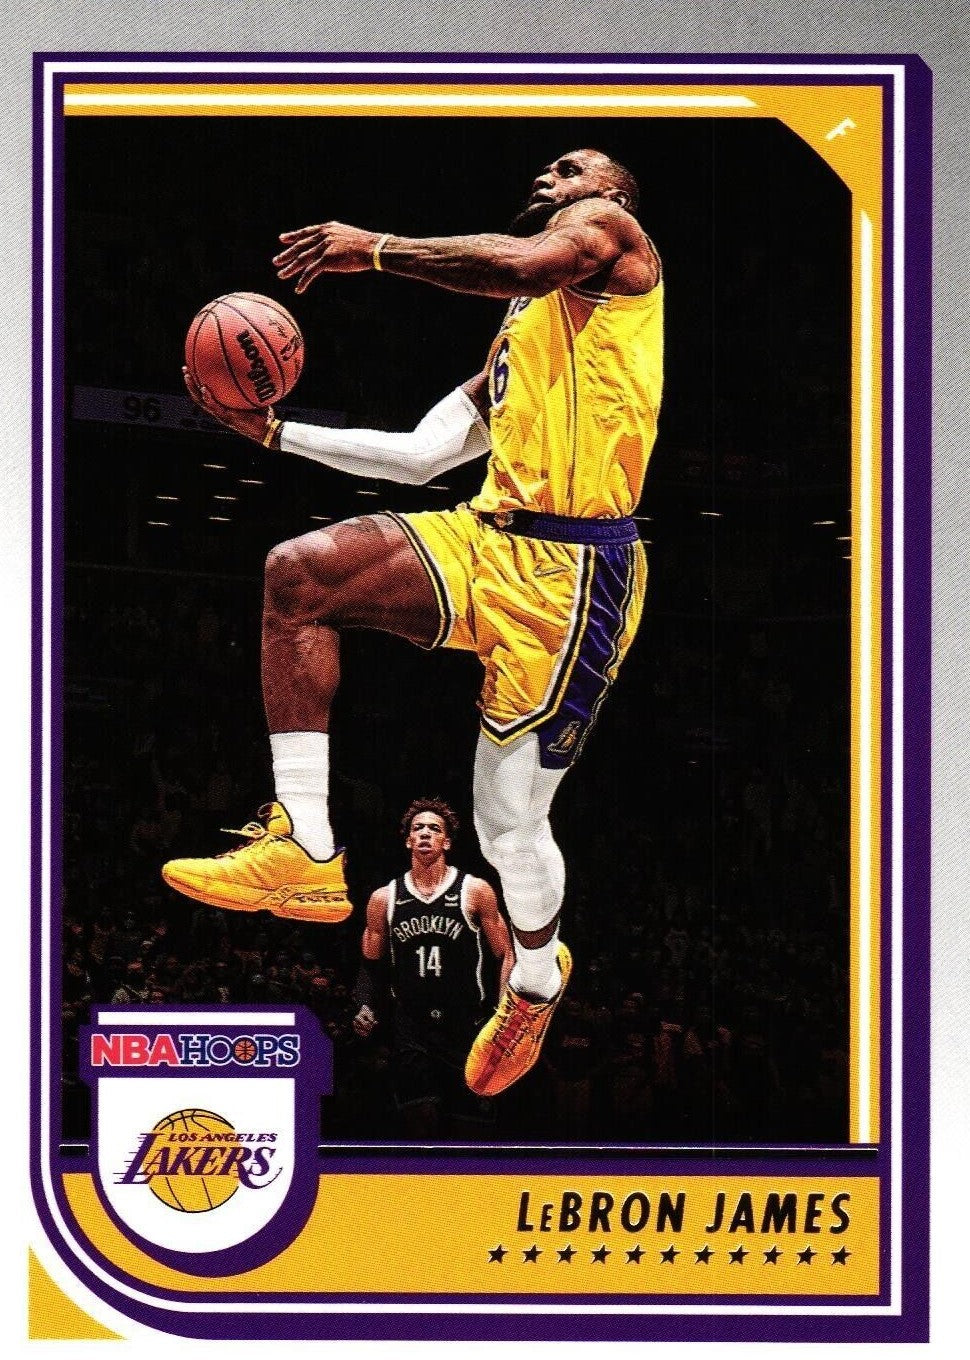  Los Angeles Lakers Cards: Lebron James, Kobe Bryant